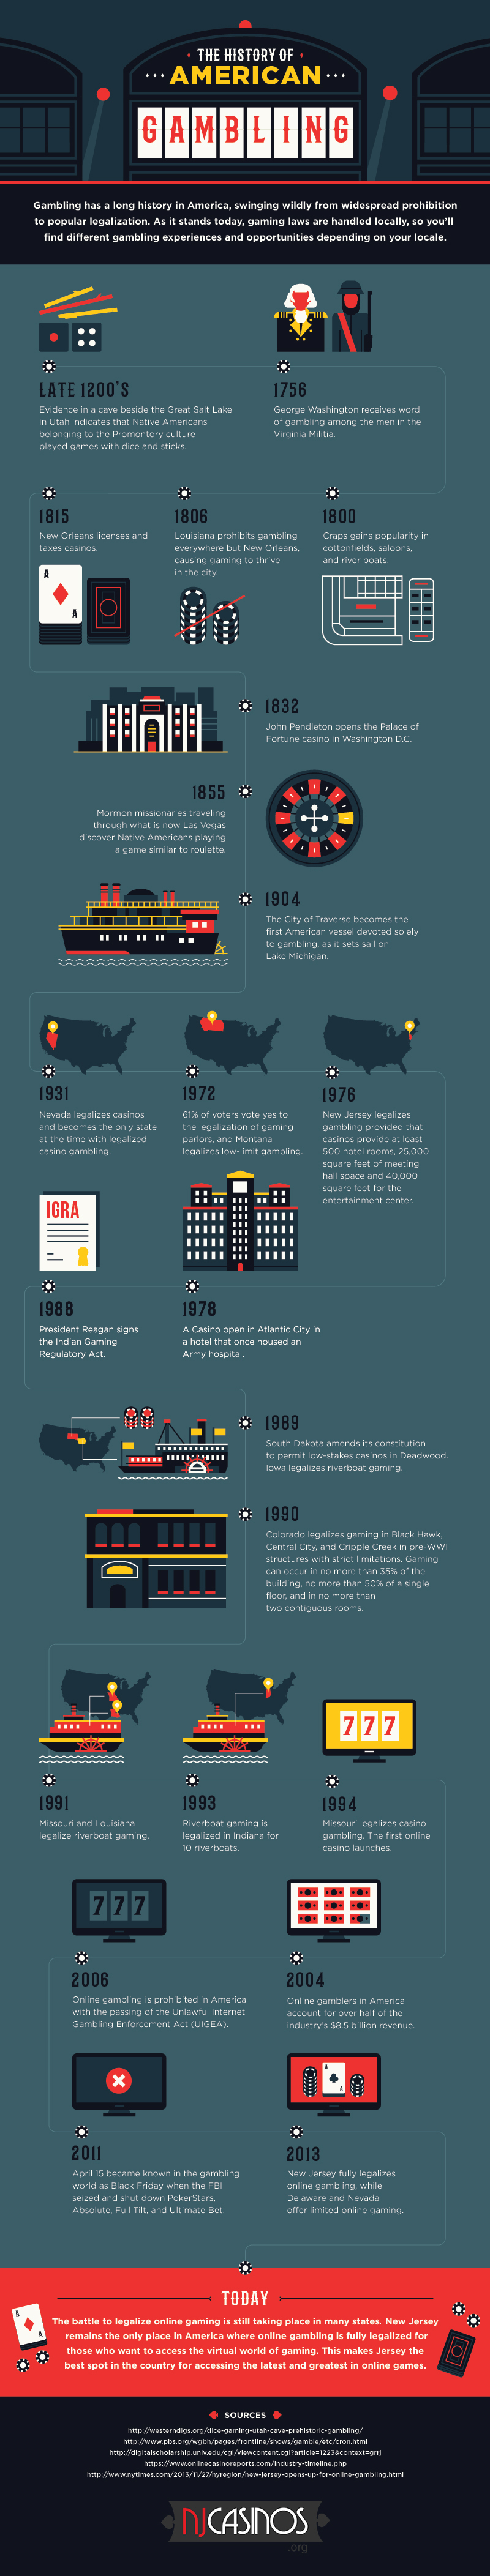 infographic history-1